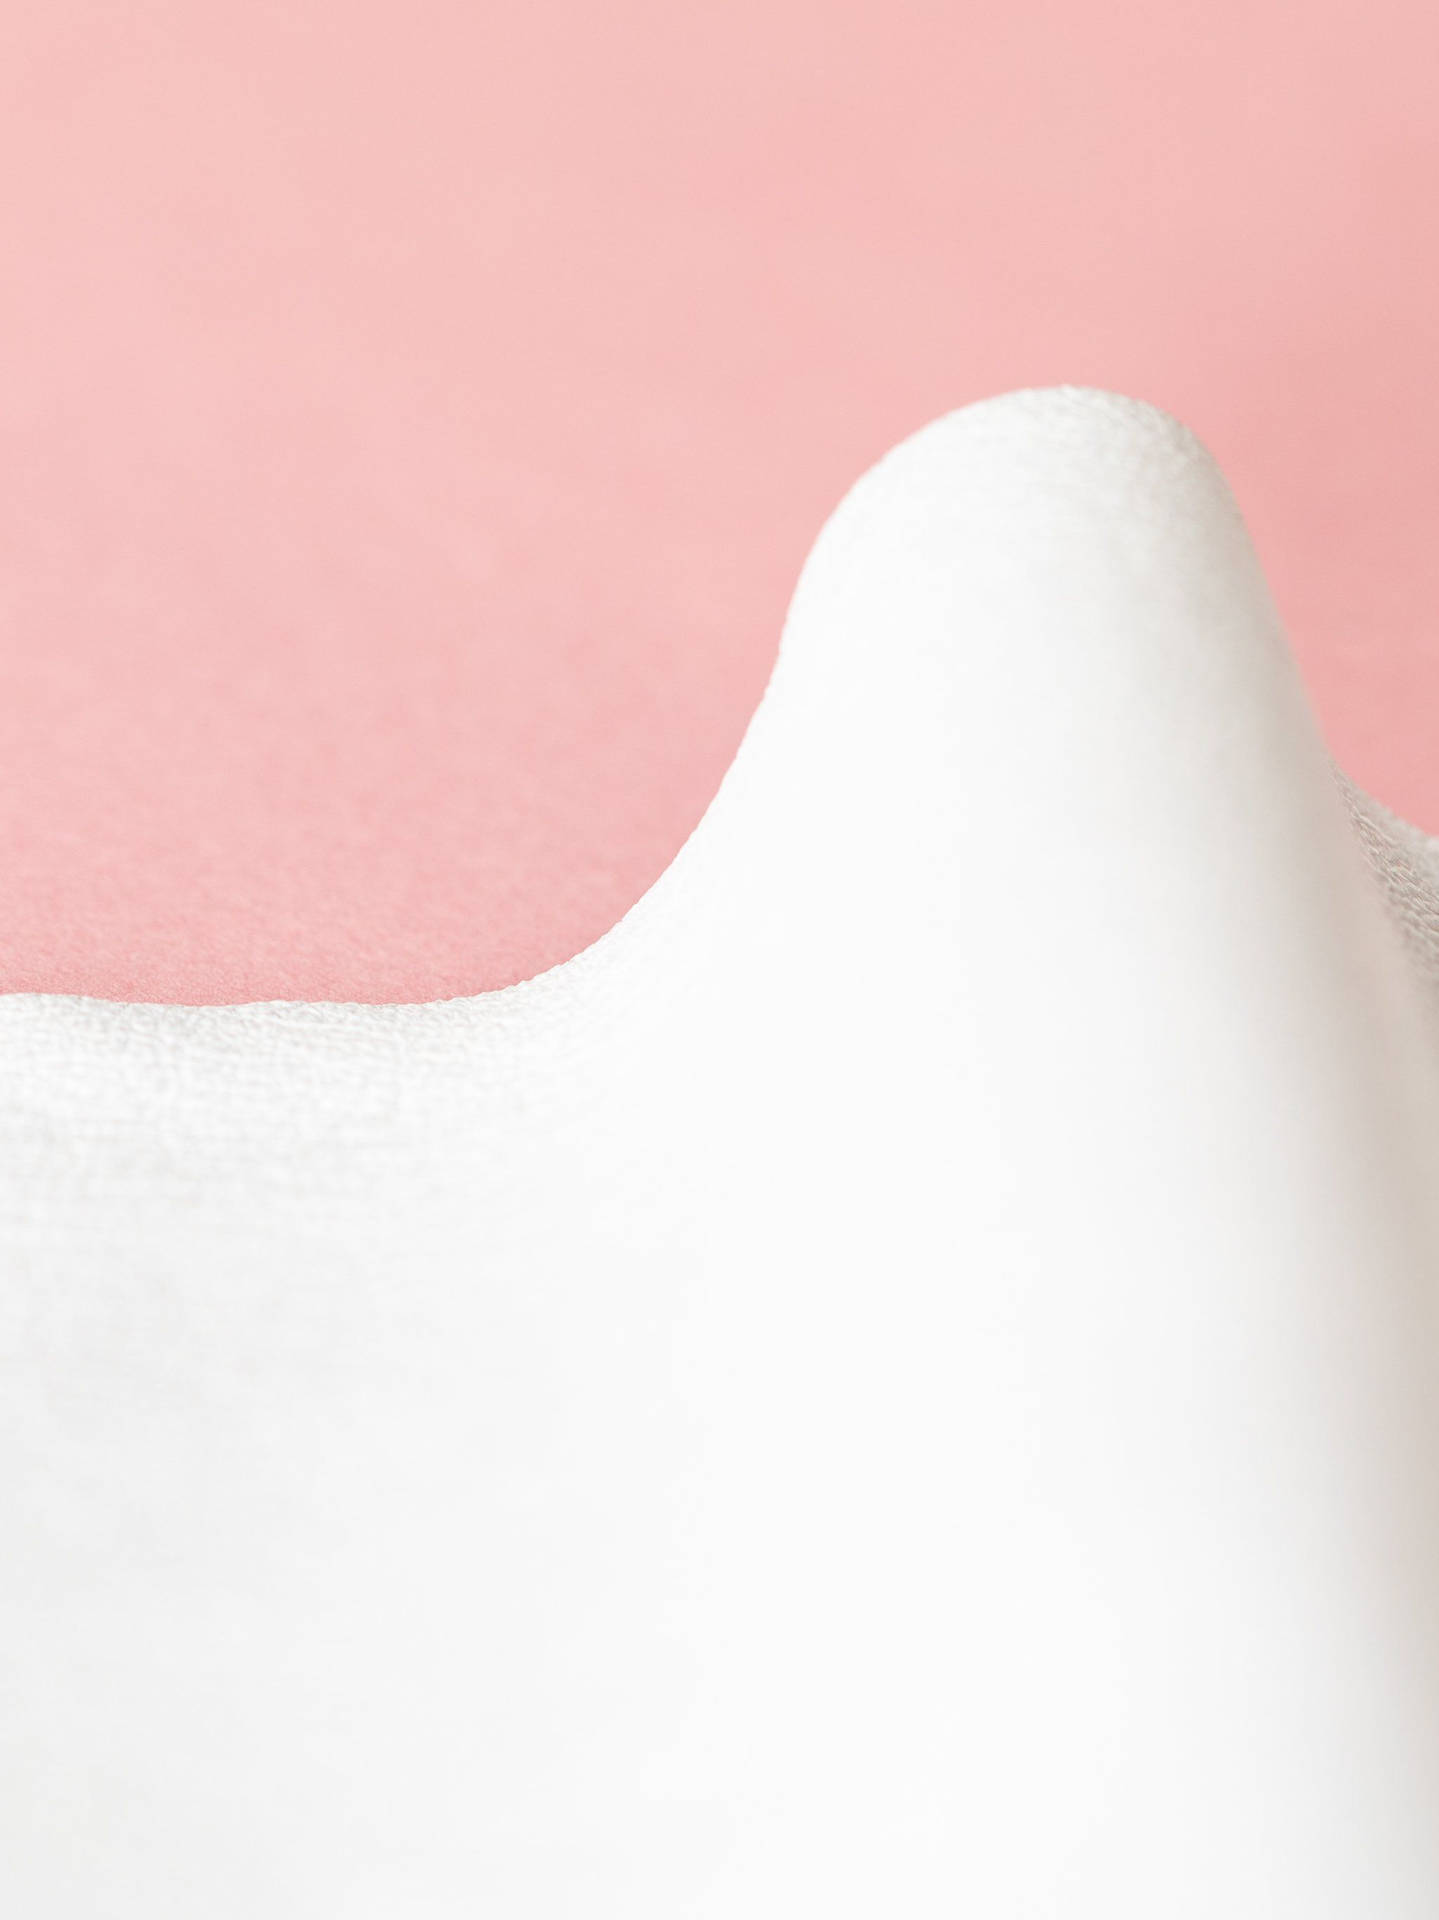 Padrãoabstrato Rosa Pastel E Branco Para Papel De Parede De Computador Ou Celular. Papel de Parede